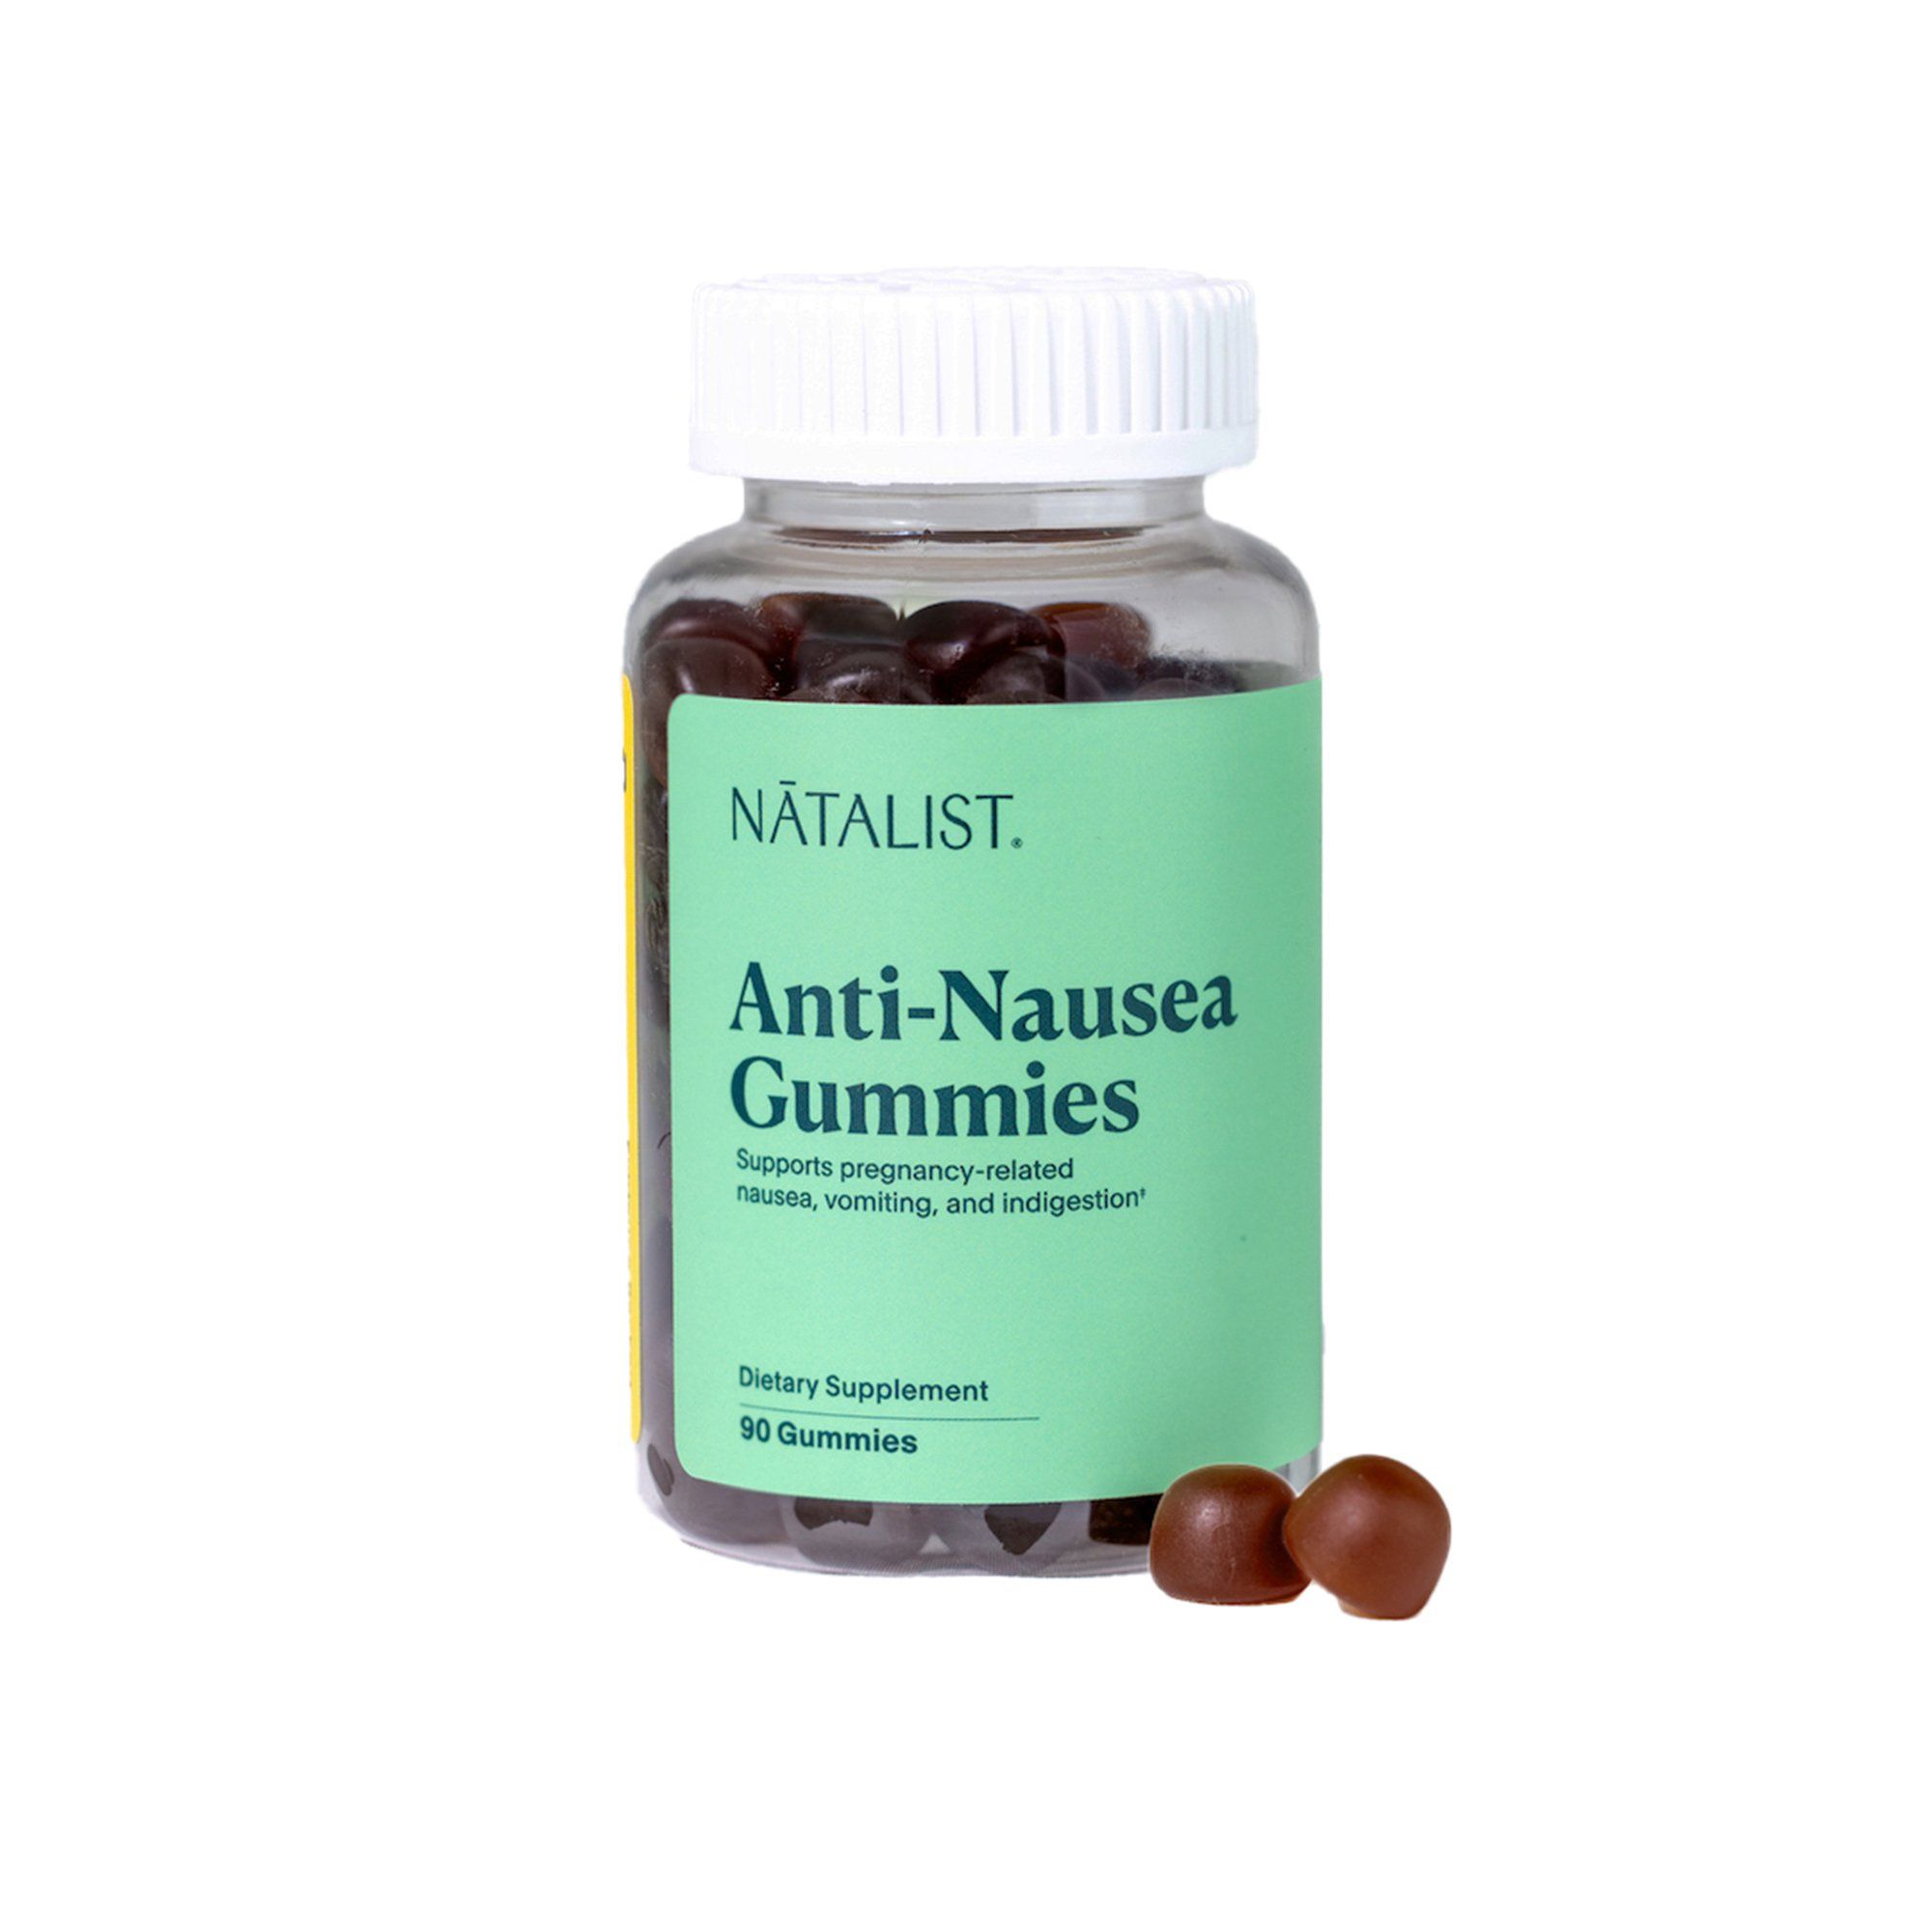 Natalist Anti-Nausea Gummies, Honey Ginger Flavor - 90 ct